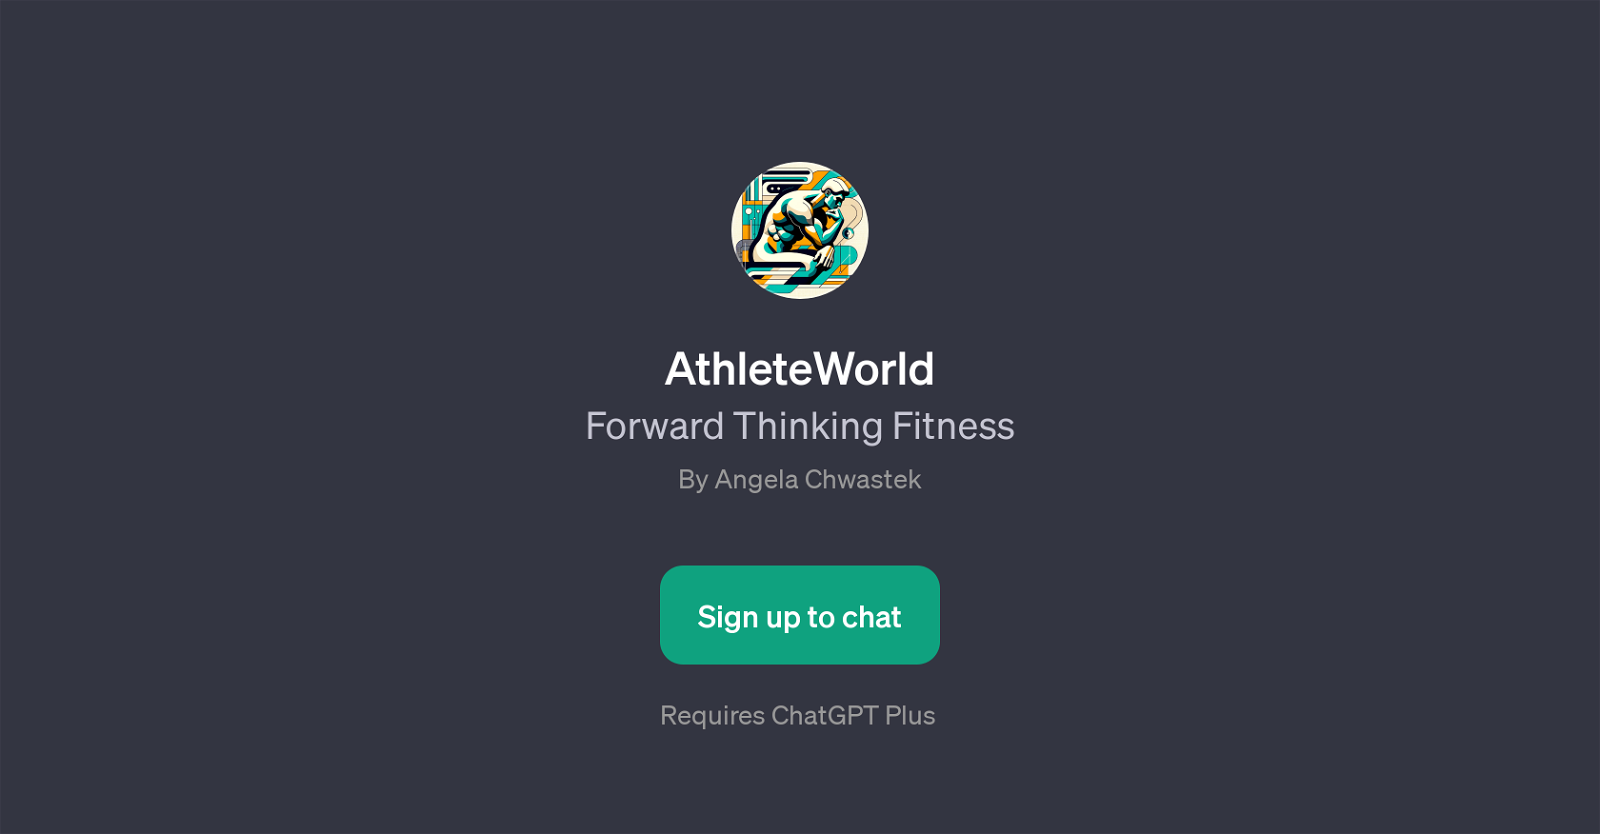 AthleteWorld website